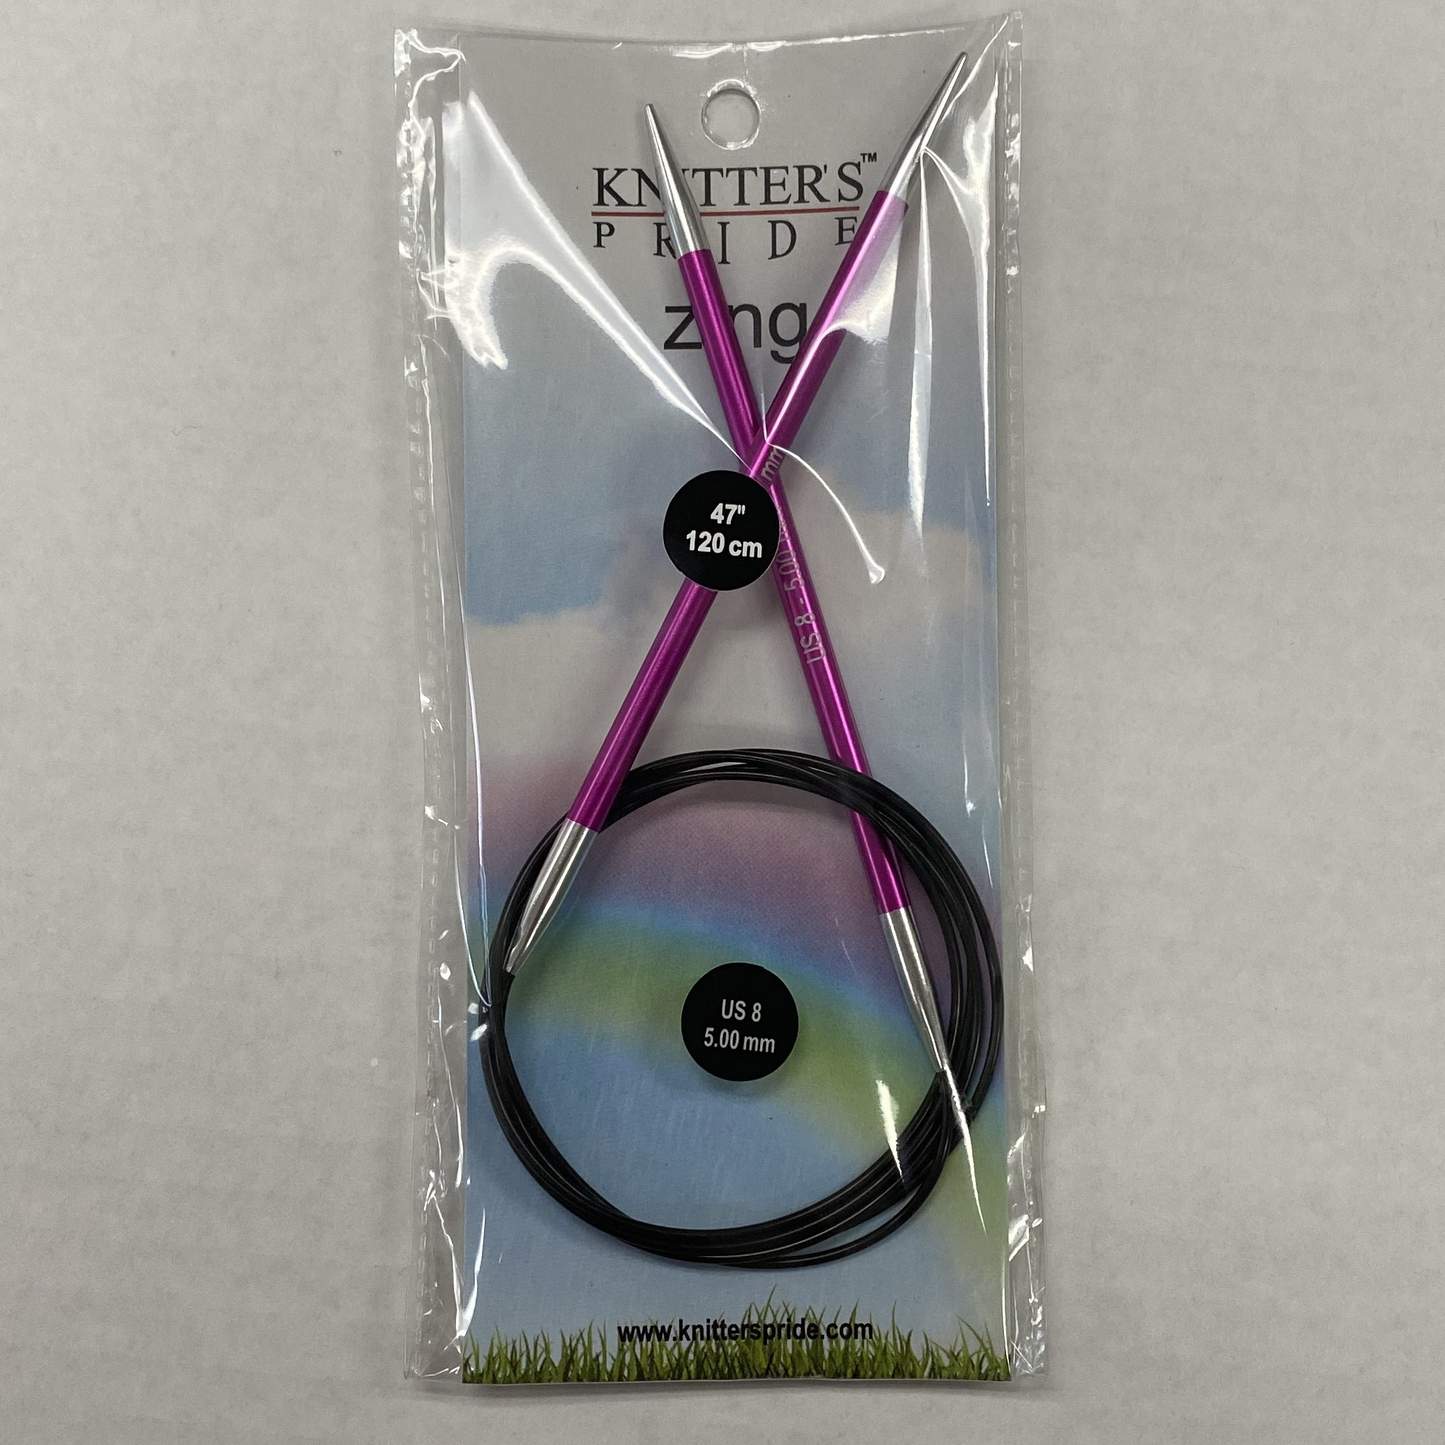 Knitter's Pride - Zing - US 8 / 5.00mm Fixed Circular Needles